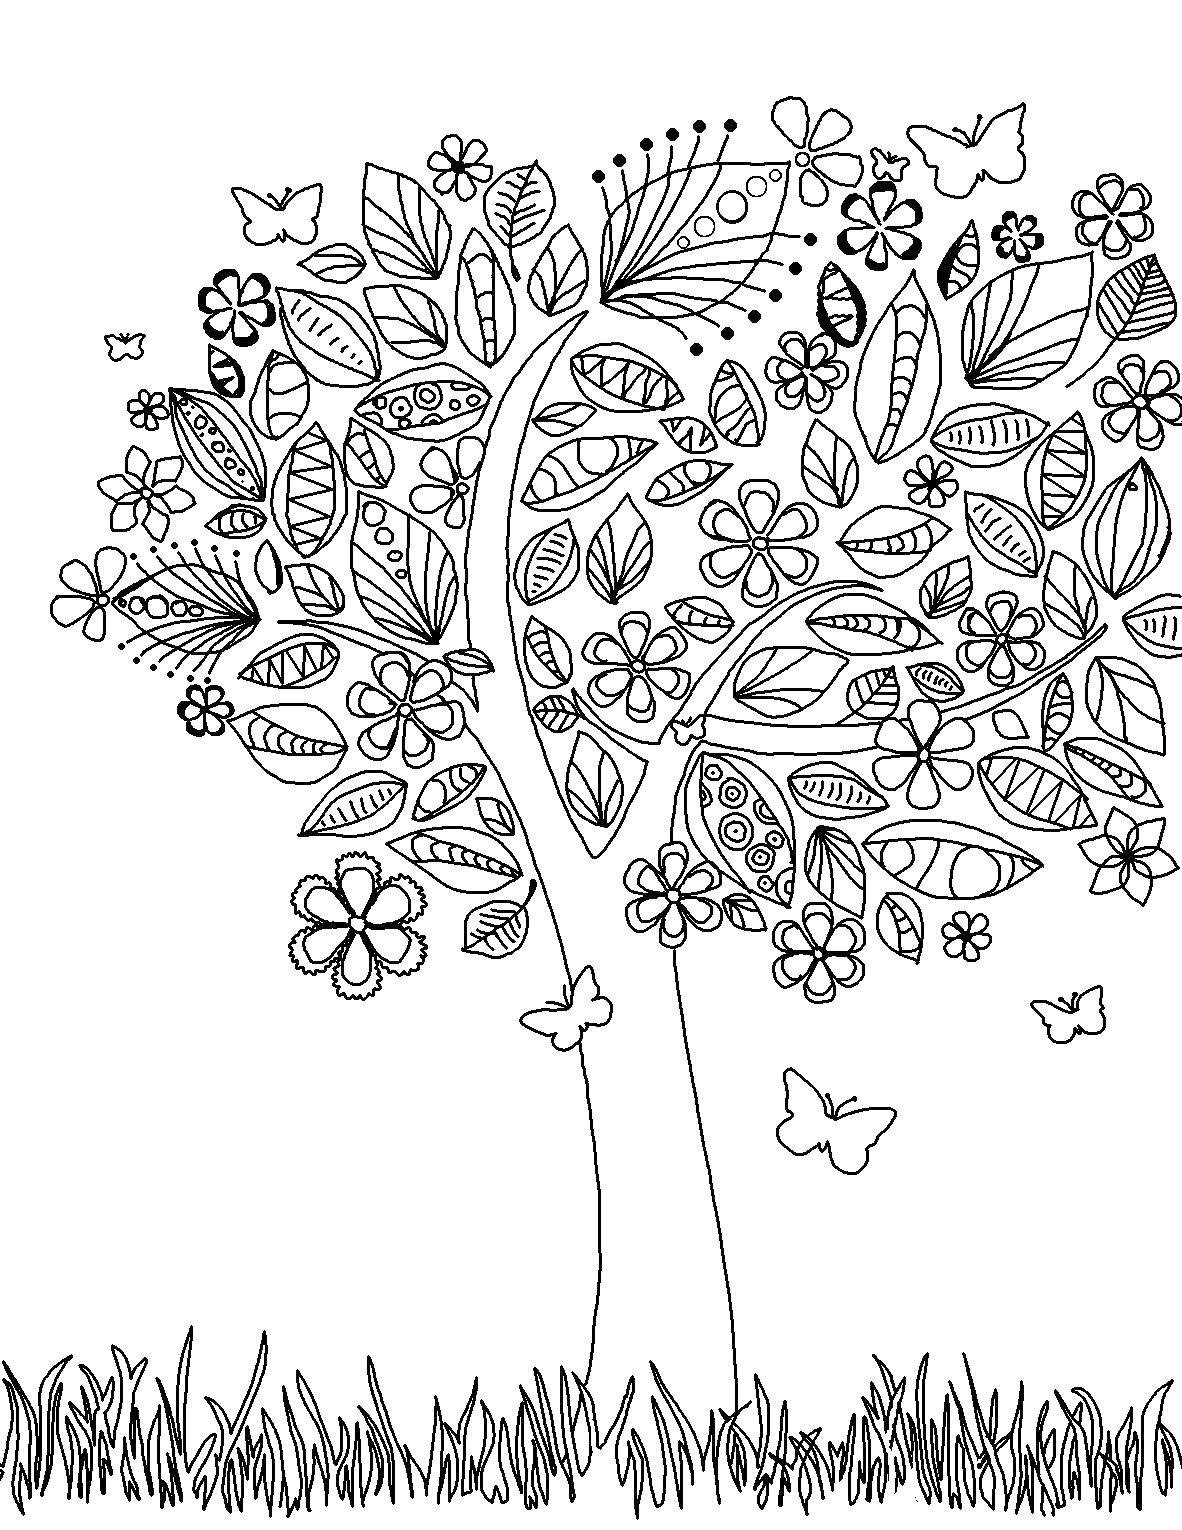 Название: Раскраска Дерево антистесс. Категория: раскраски антистресс. Теги: дерево, бабочки.